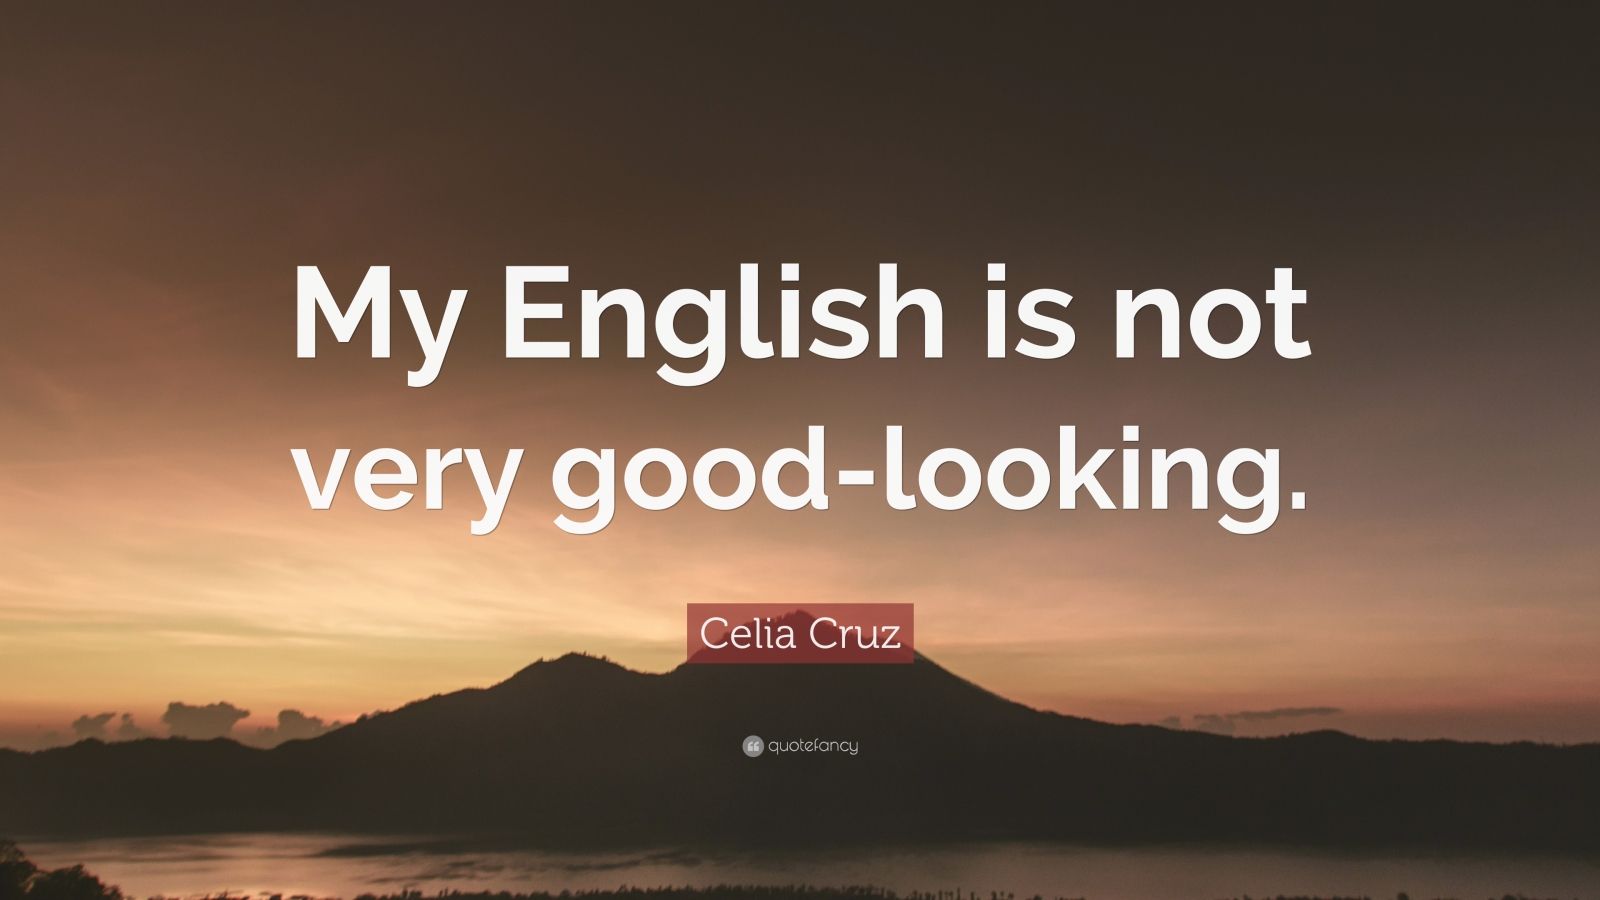 Celia Cruz Quote: “My English is not very good-looking.” (9 wallpapers